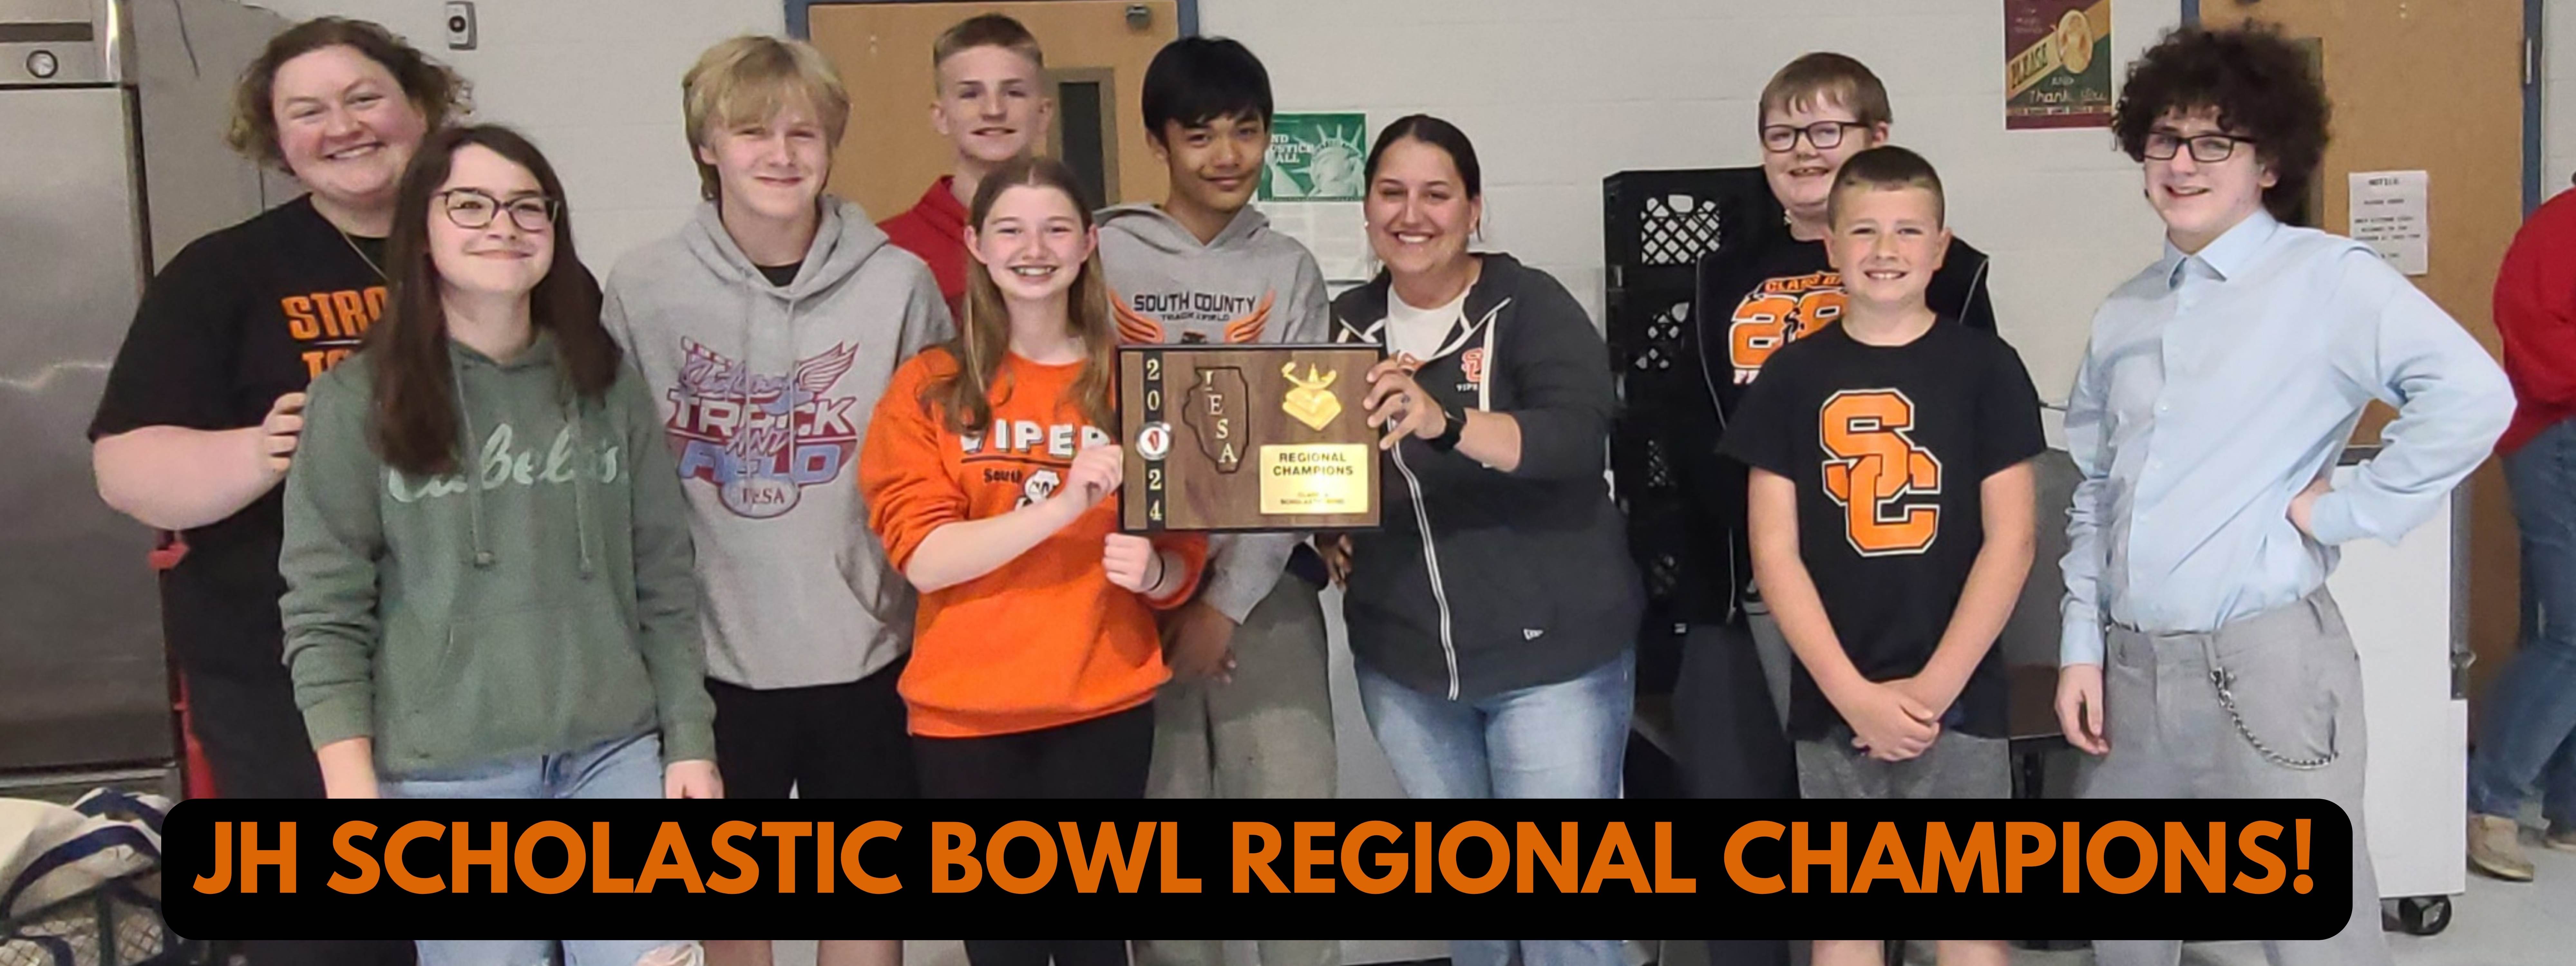 JH Scholastic Bowl REGIONAL CHAMPIONS!